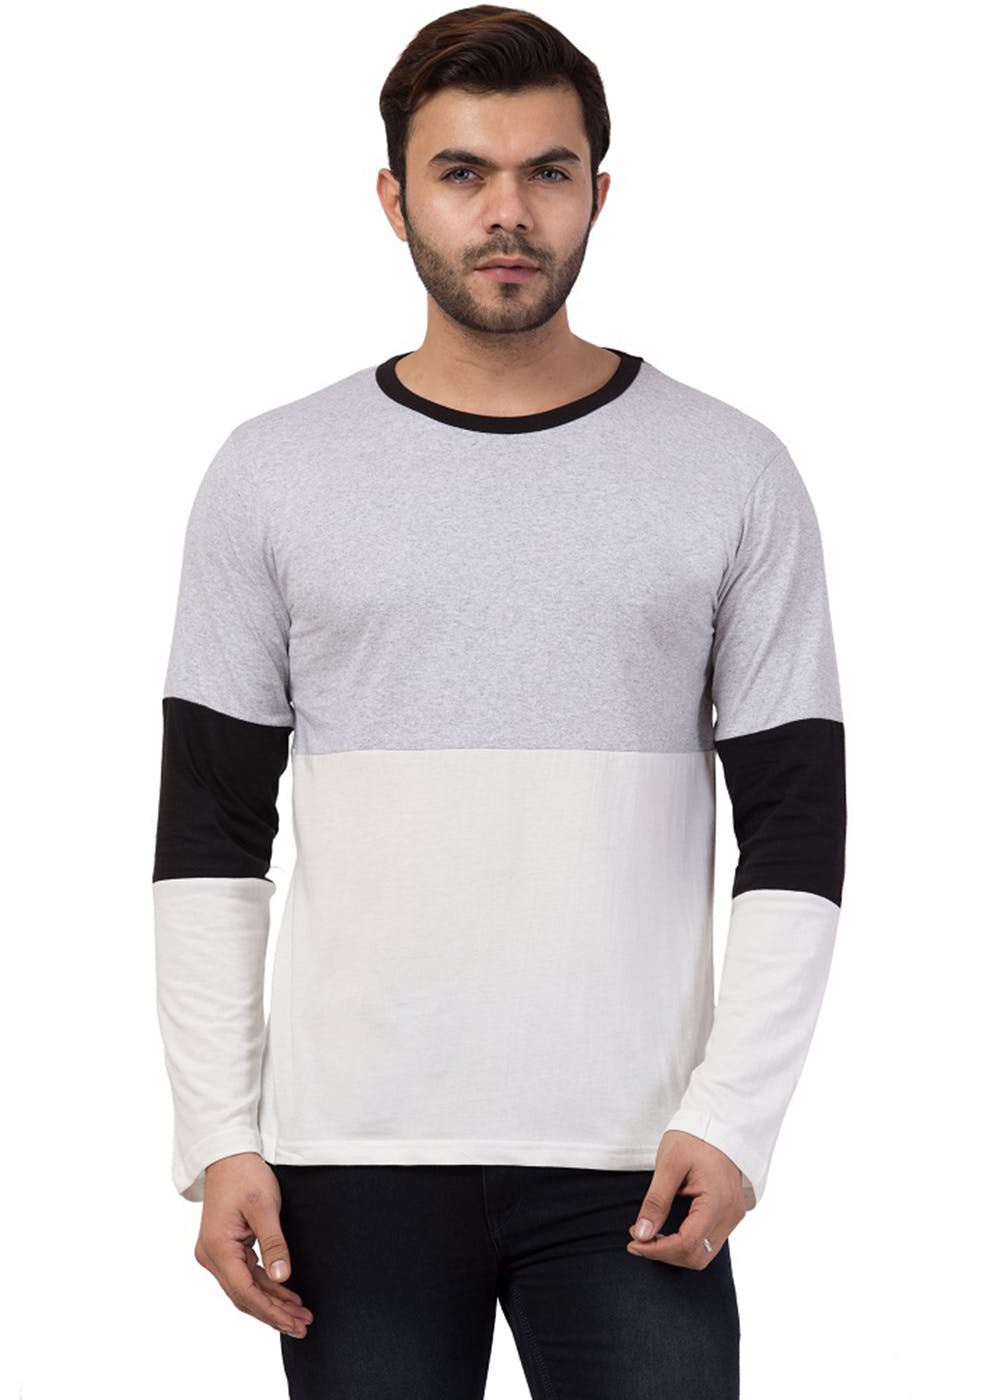 Get Three-Tone Sleeve Detail Full Sleeves T-Shirt at ₹ 499 | LBB Shop